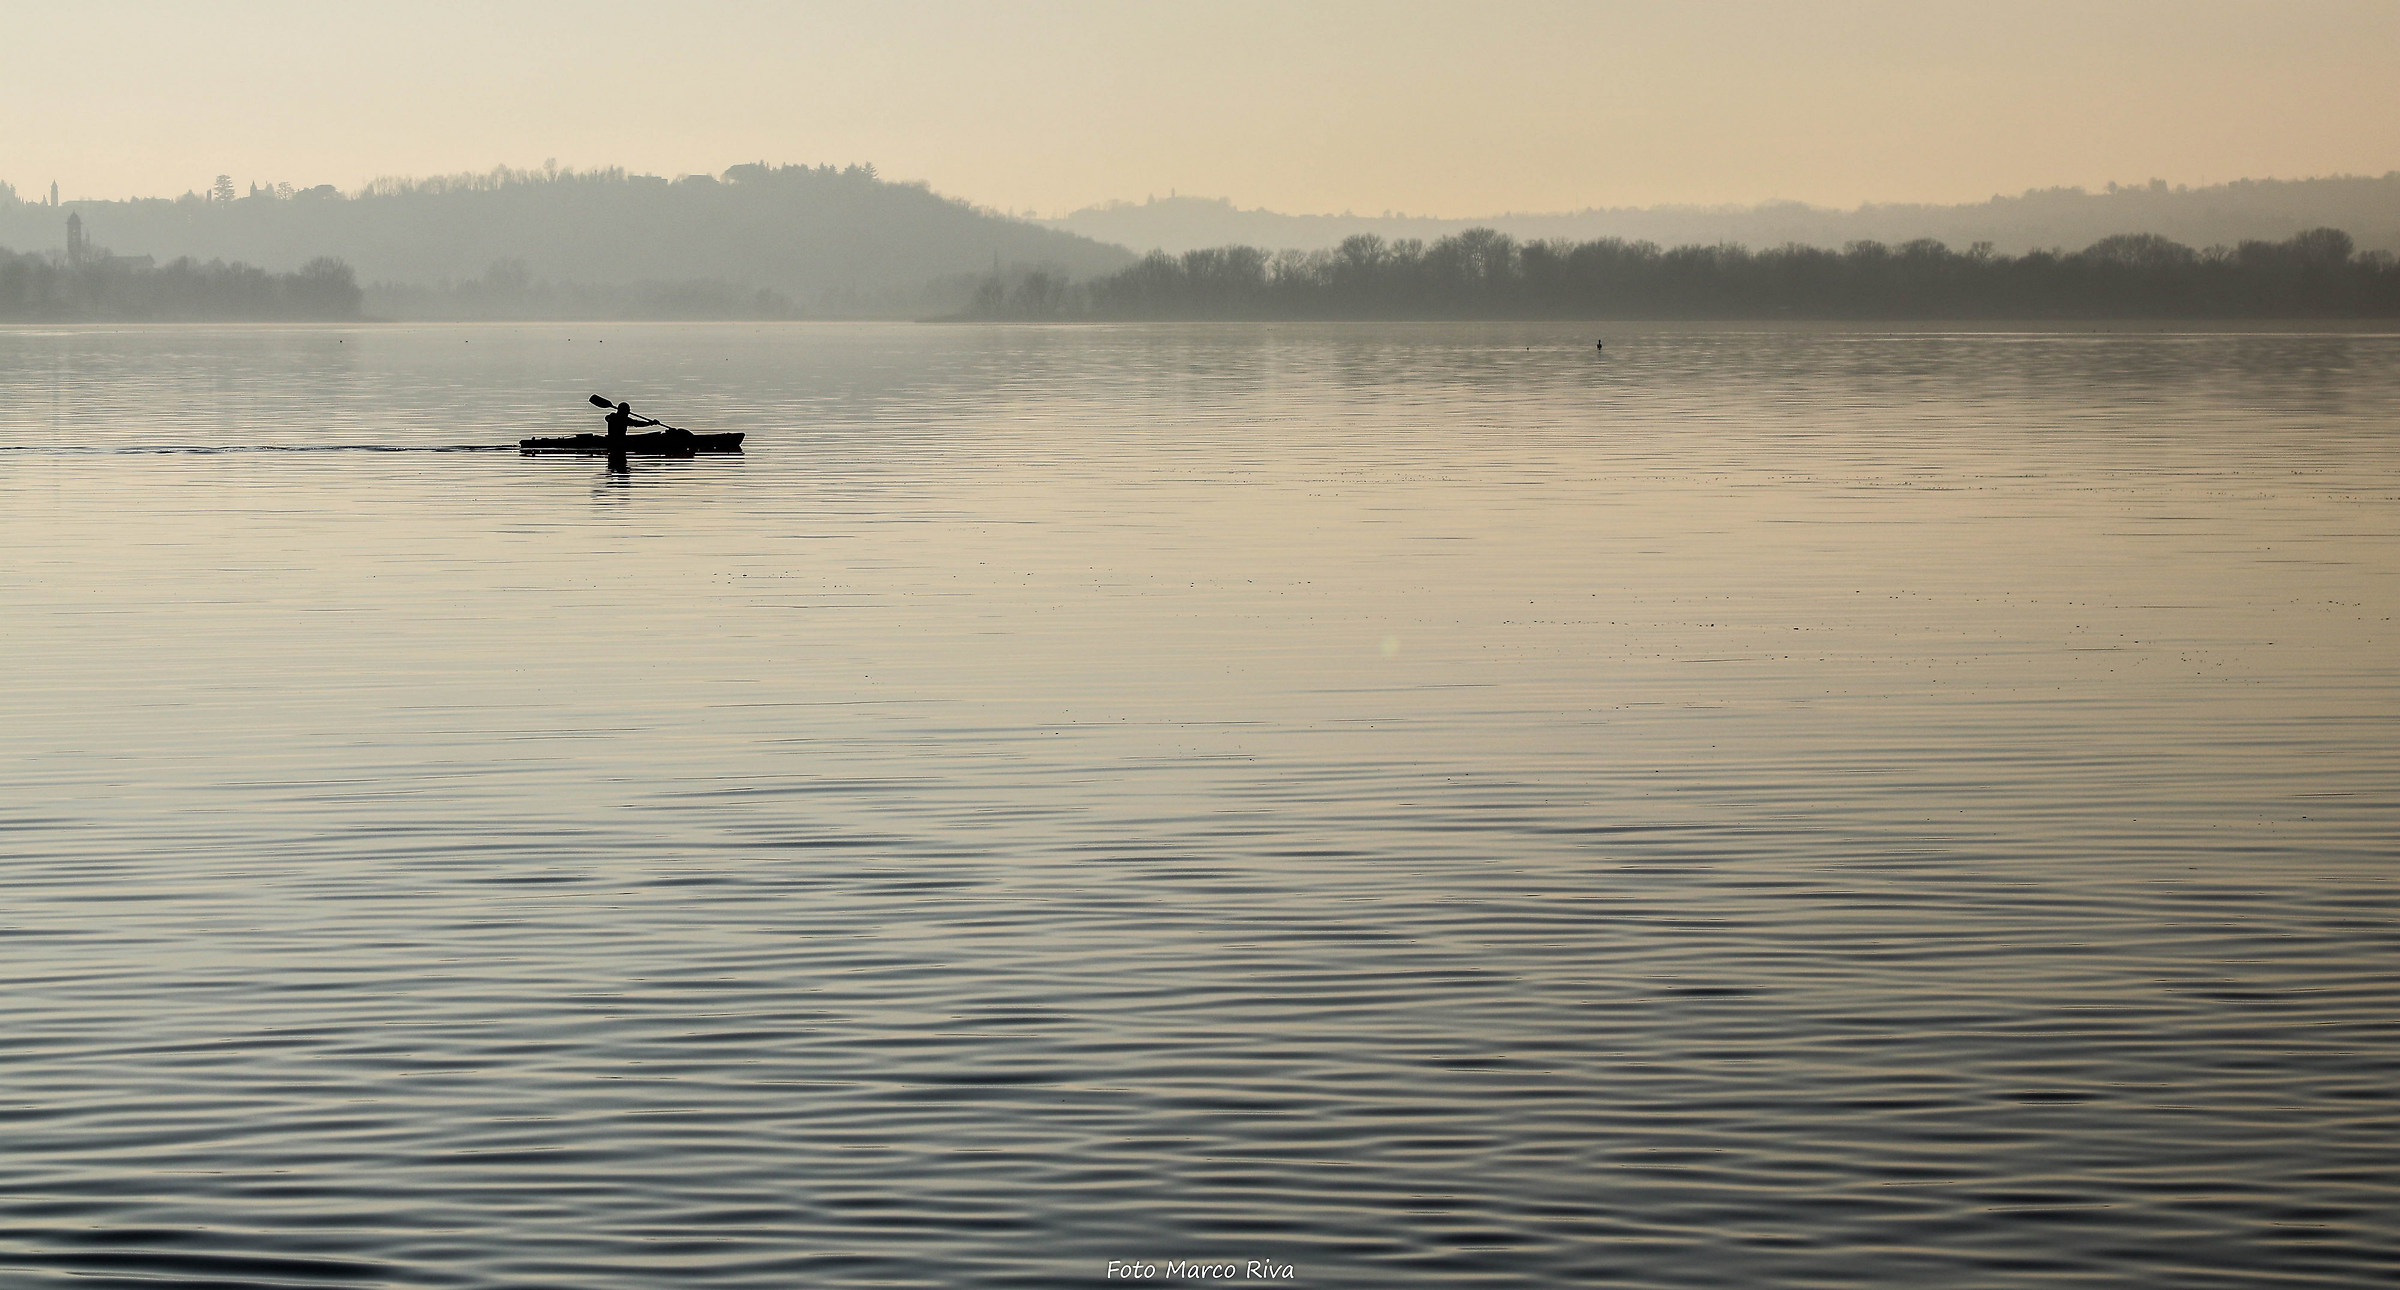 The solitary canoeist...